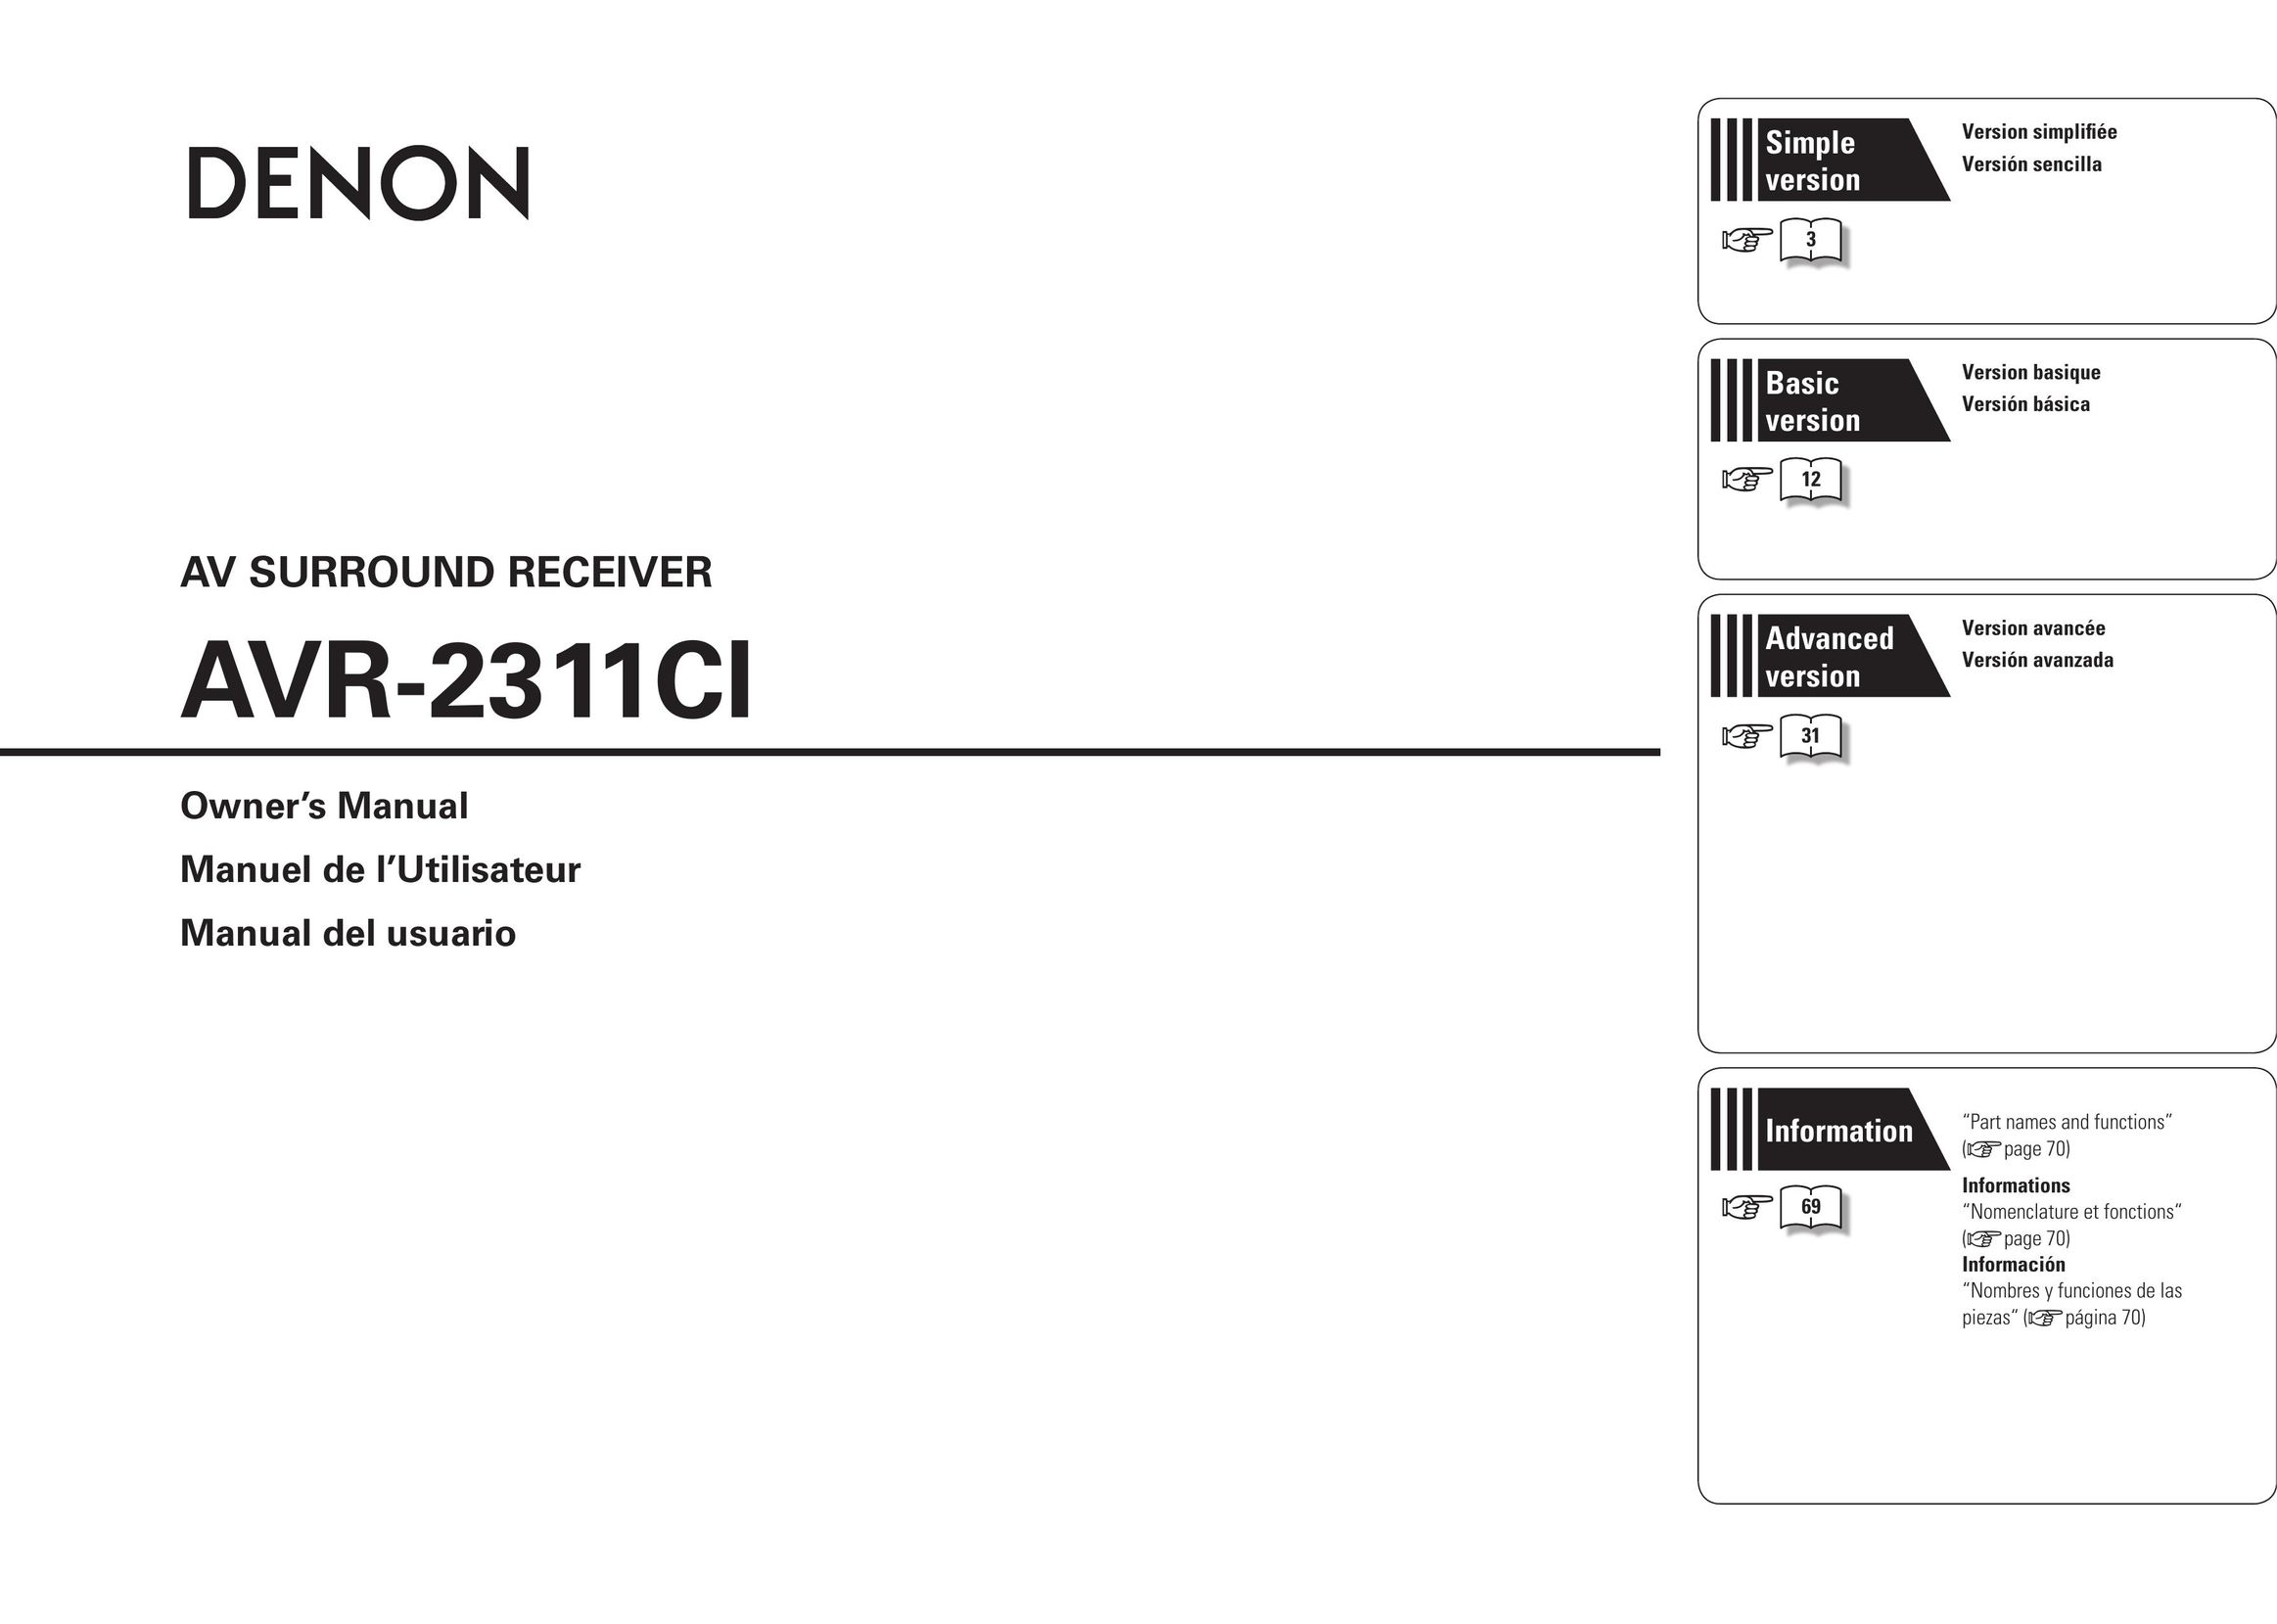 Denon AVR-2311CI Home Theater System User Manual